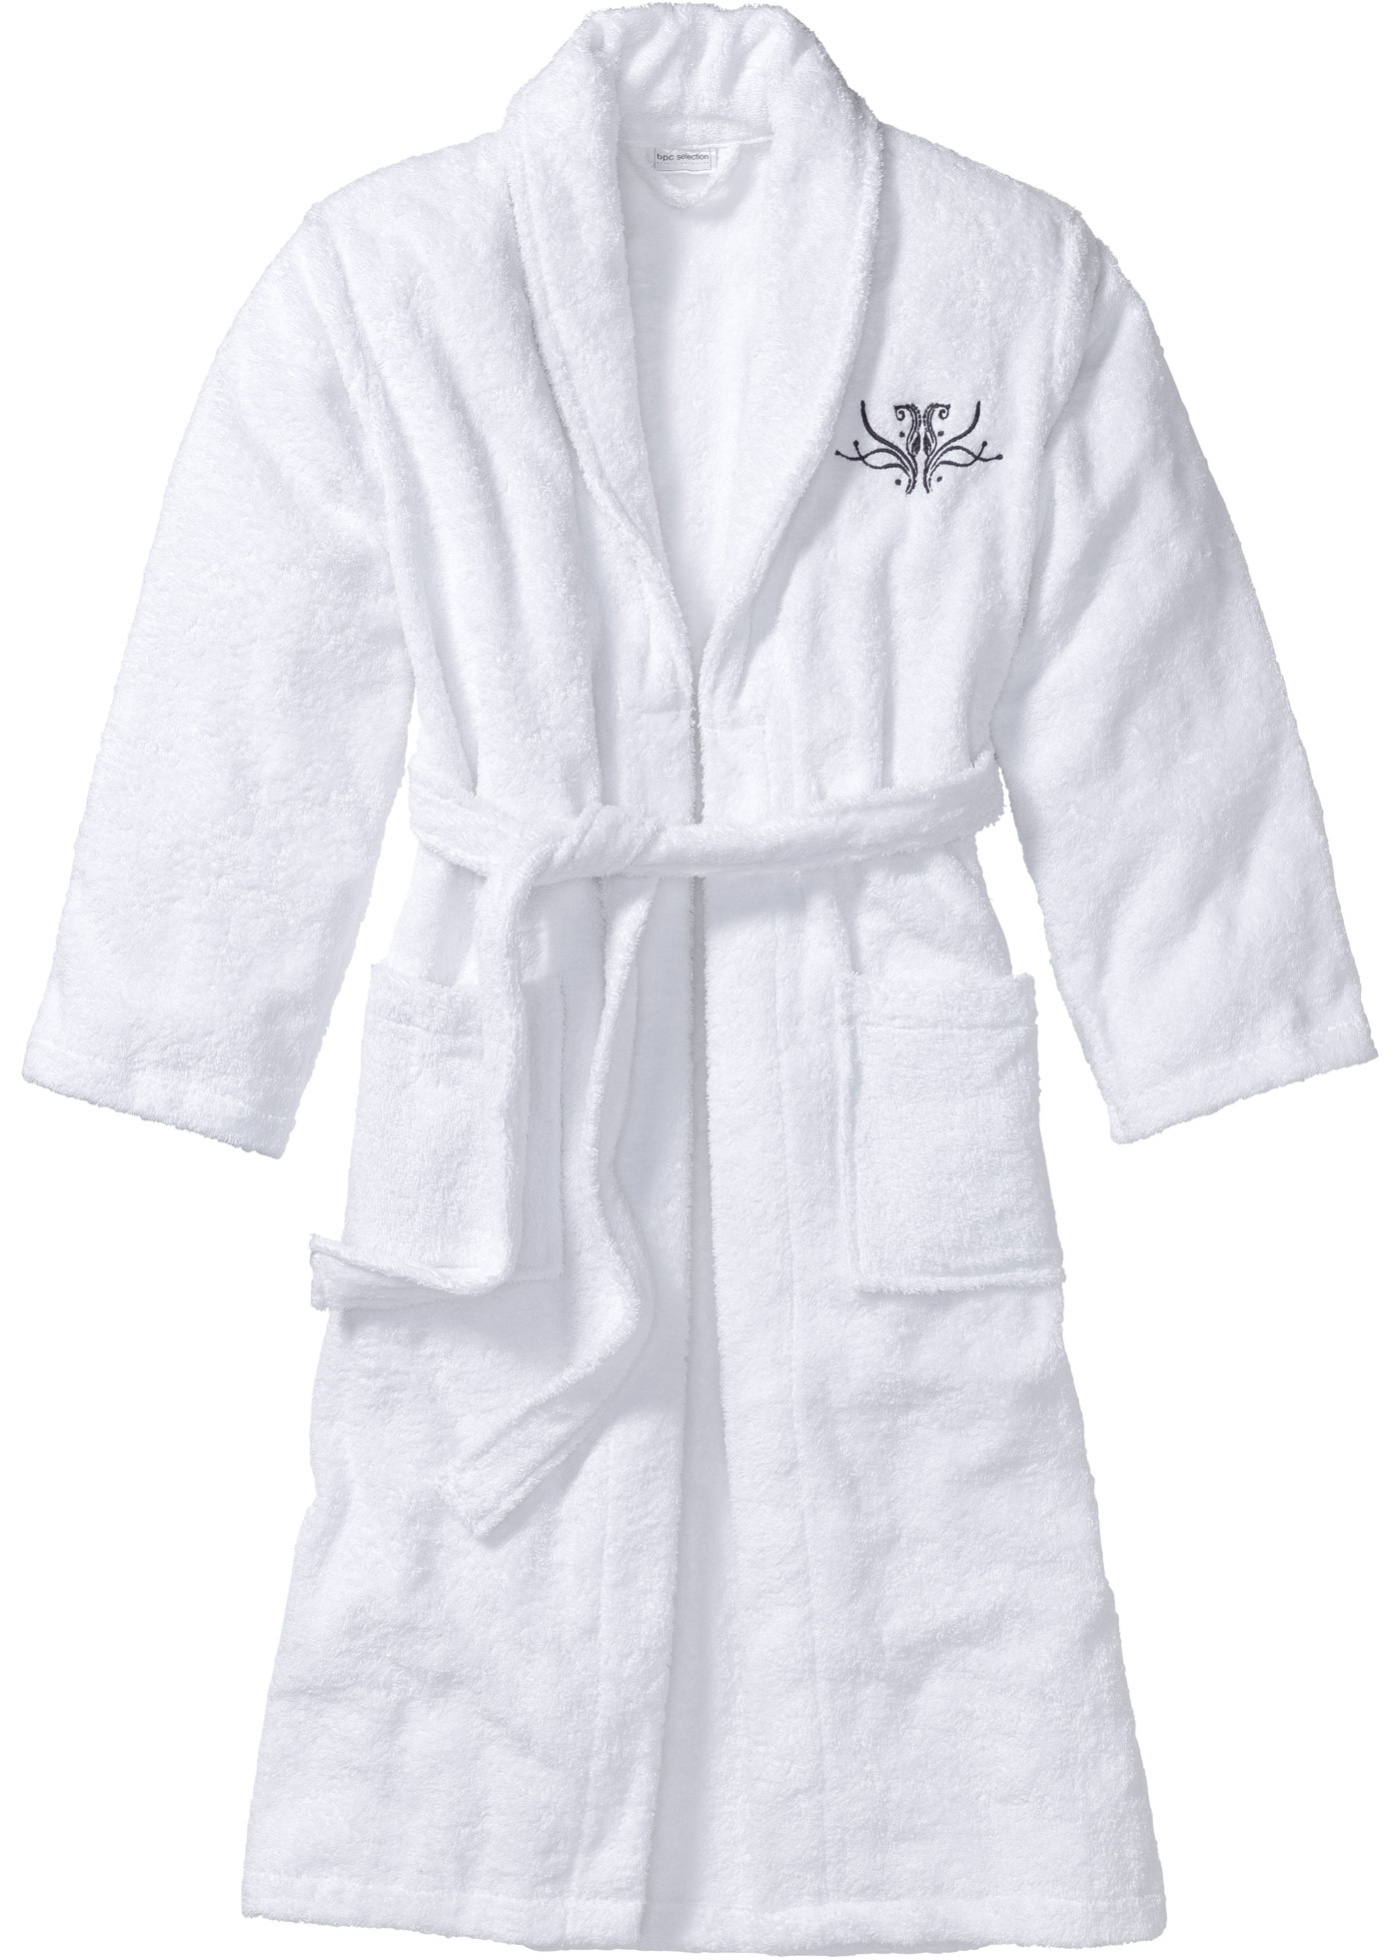 Купить халат для бани. Huber Tricot халат. Махровый халат. Банный халат. Белый махровый халат.